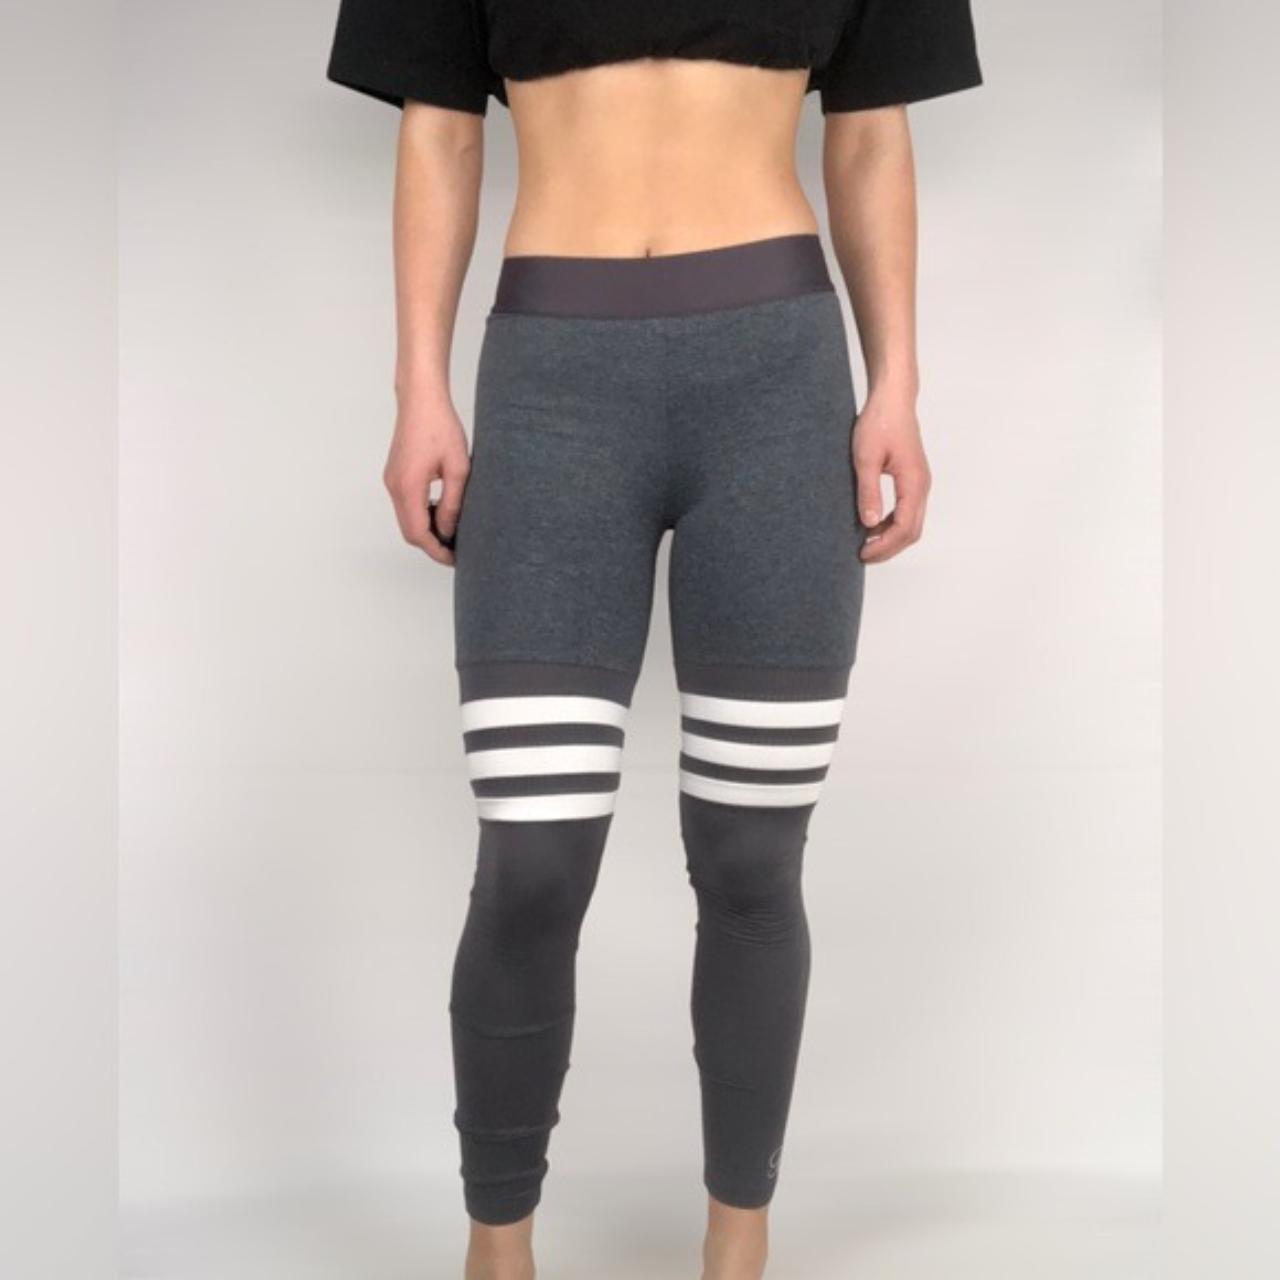 Bombshell Sportswear Scrunch Thigh Highs - Grey/Black Camo